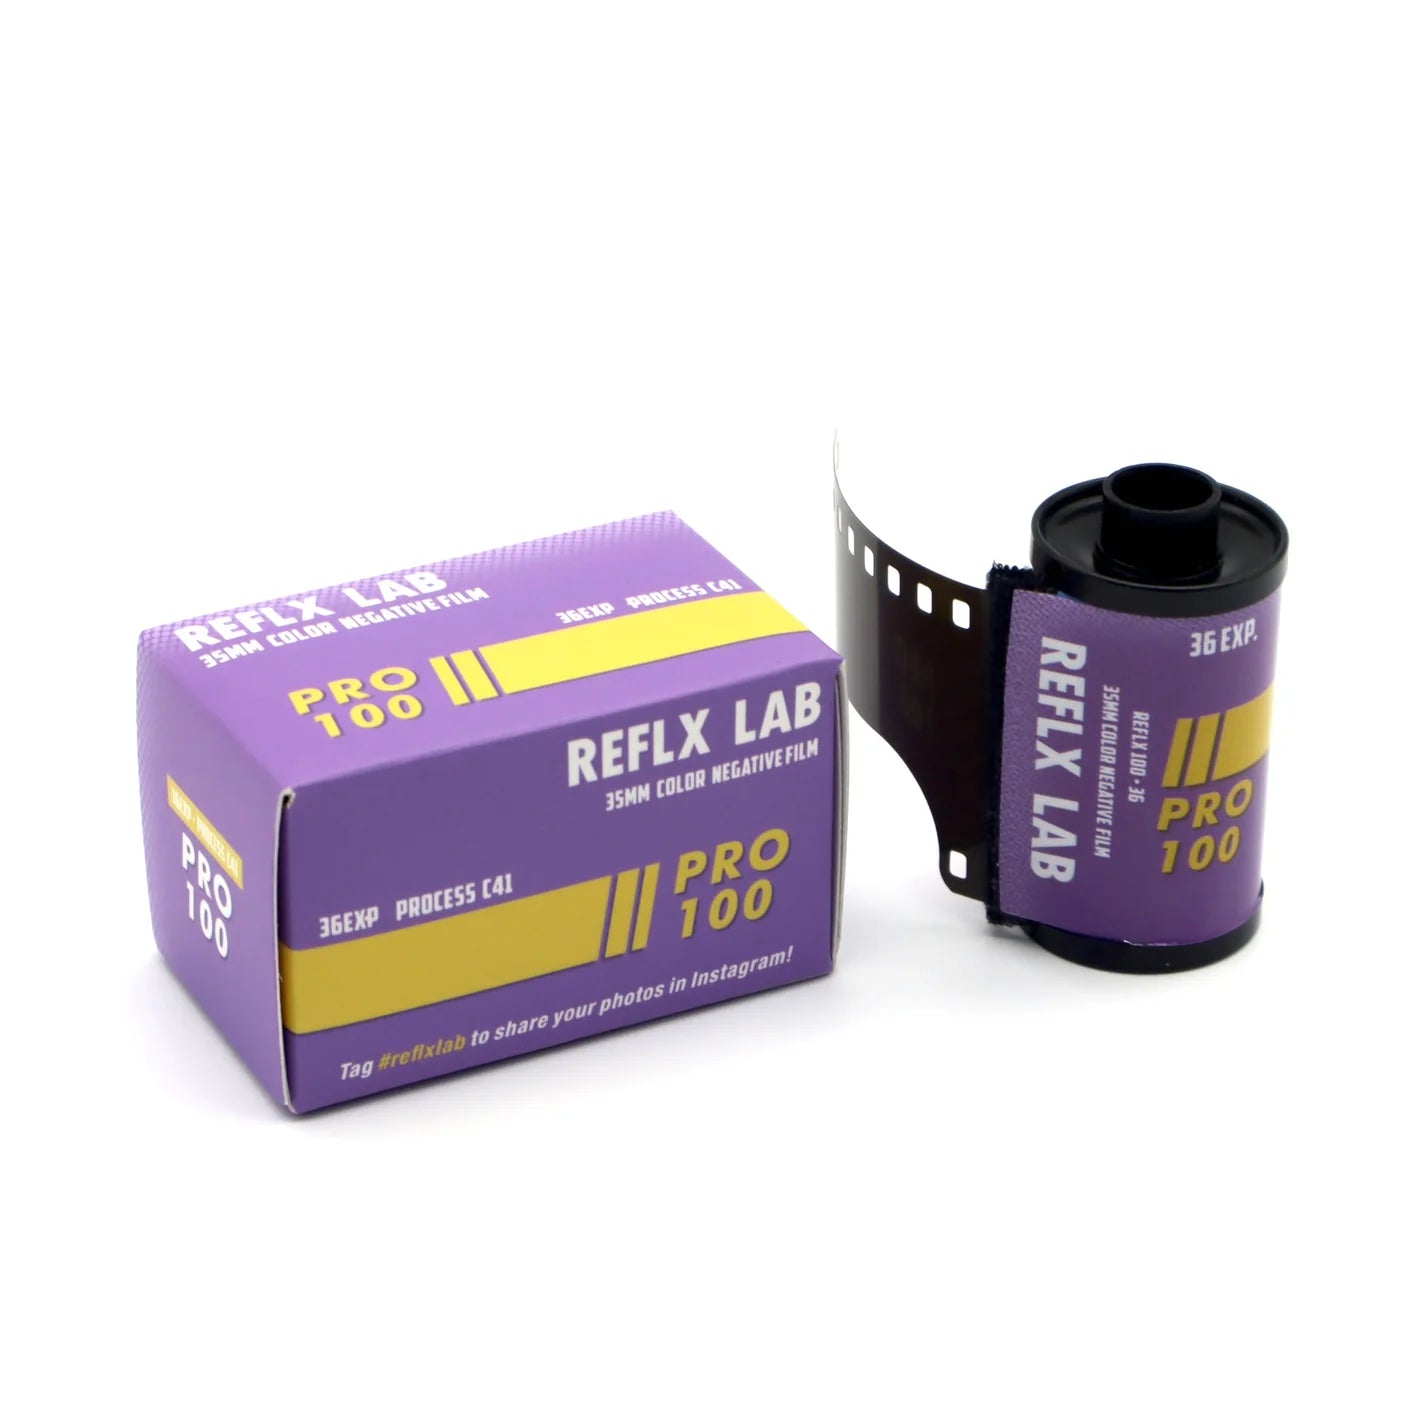 Reflx Lab Pro 100 Color Negative Film 36EXP